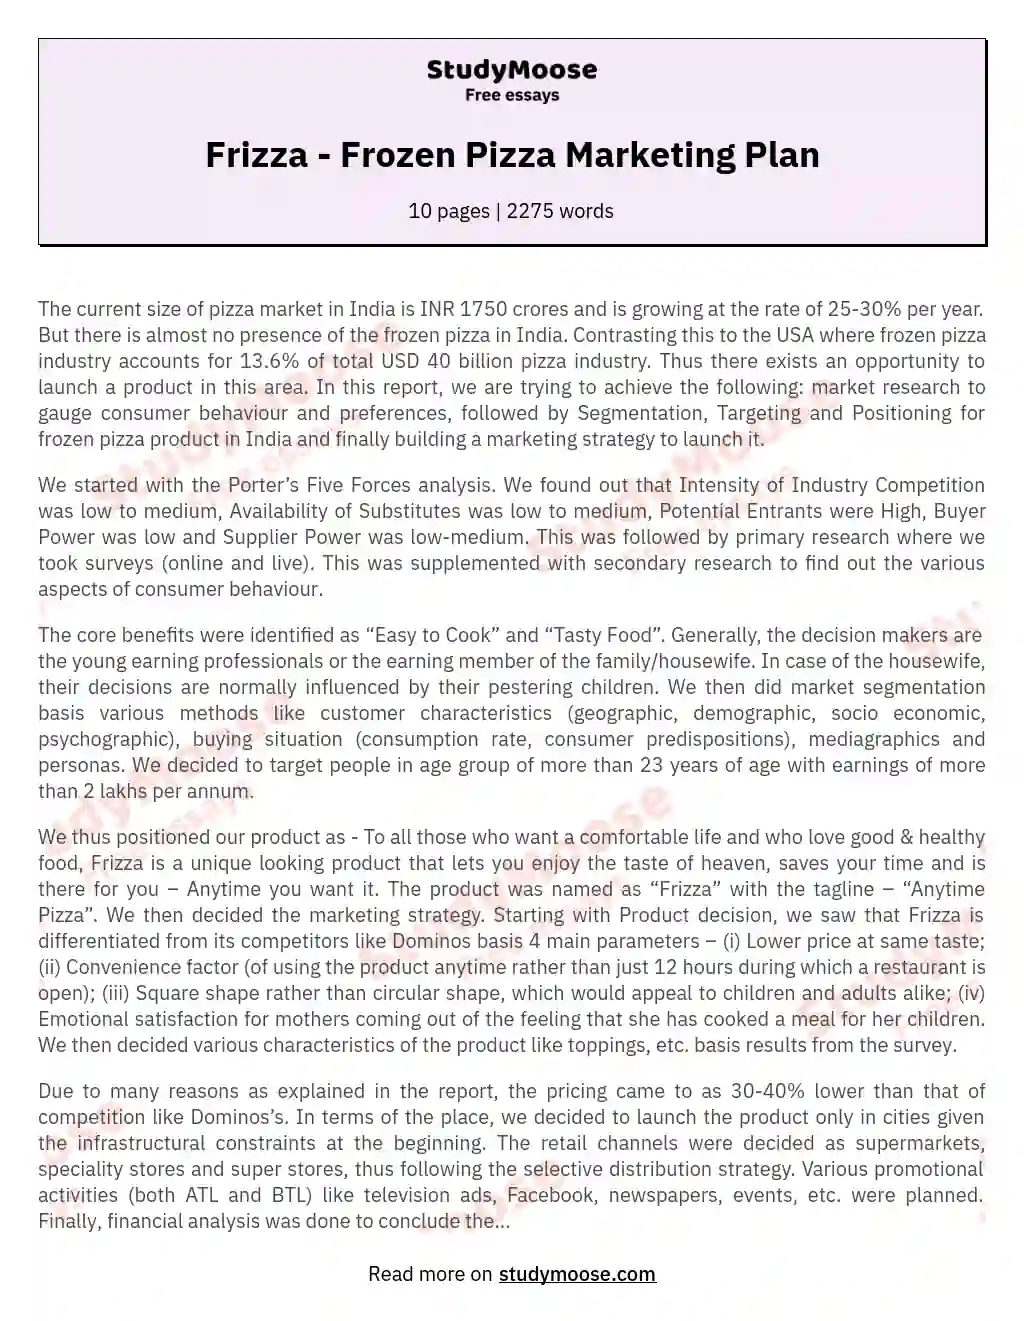 Frizza - Frozen Pizza Marketing Plan essay